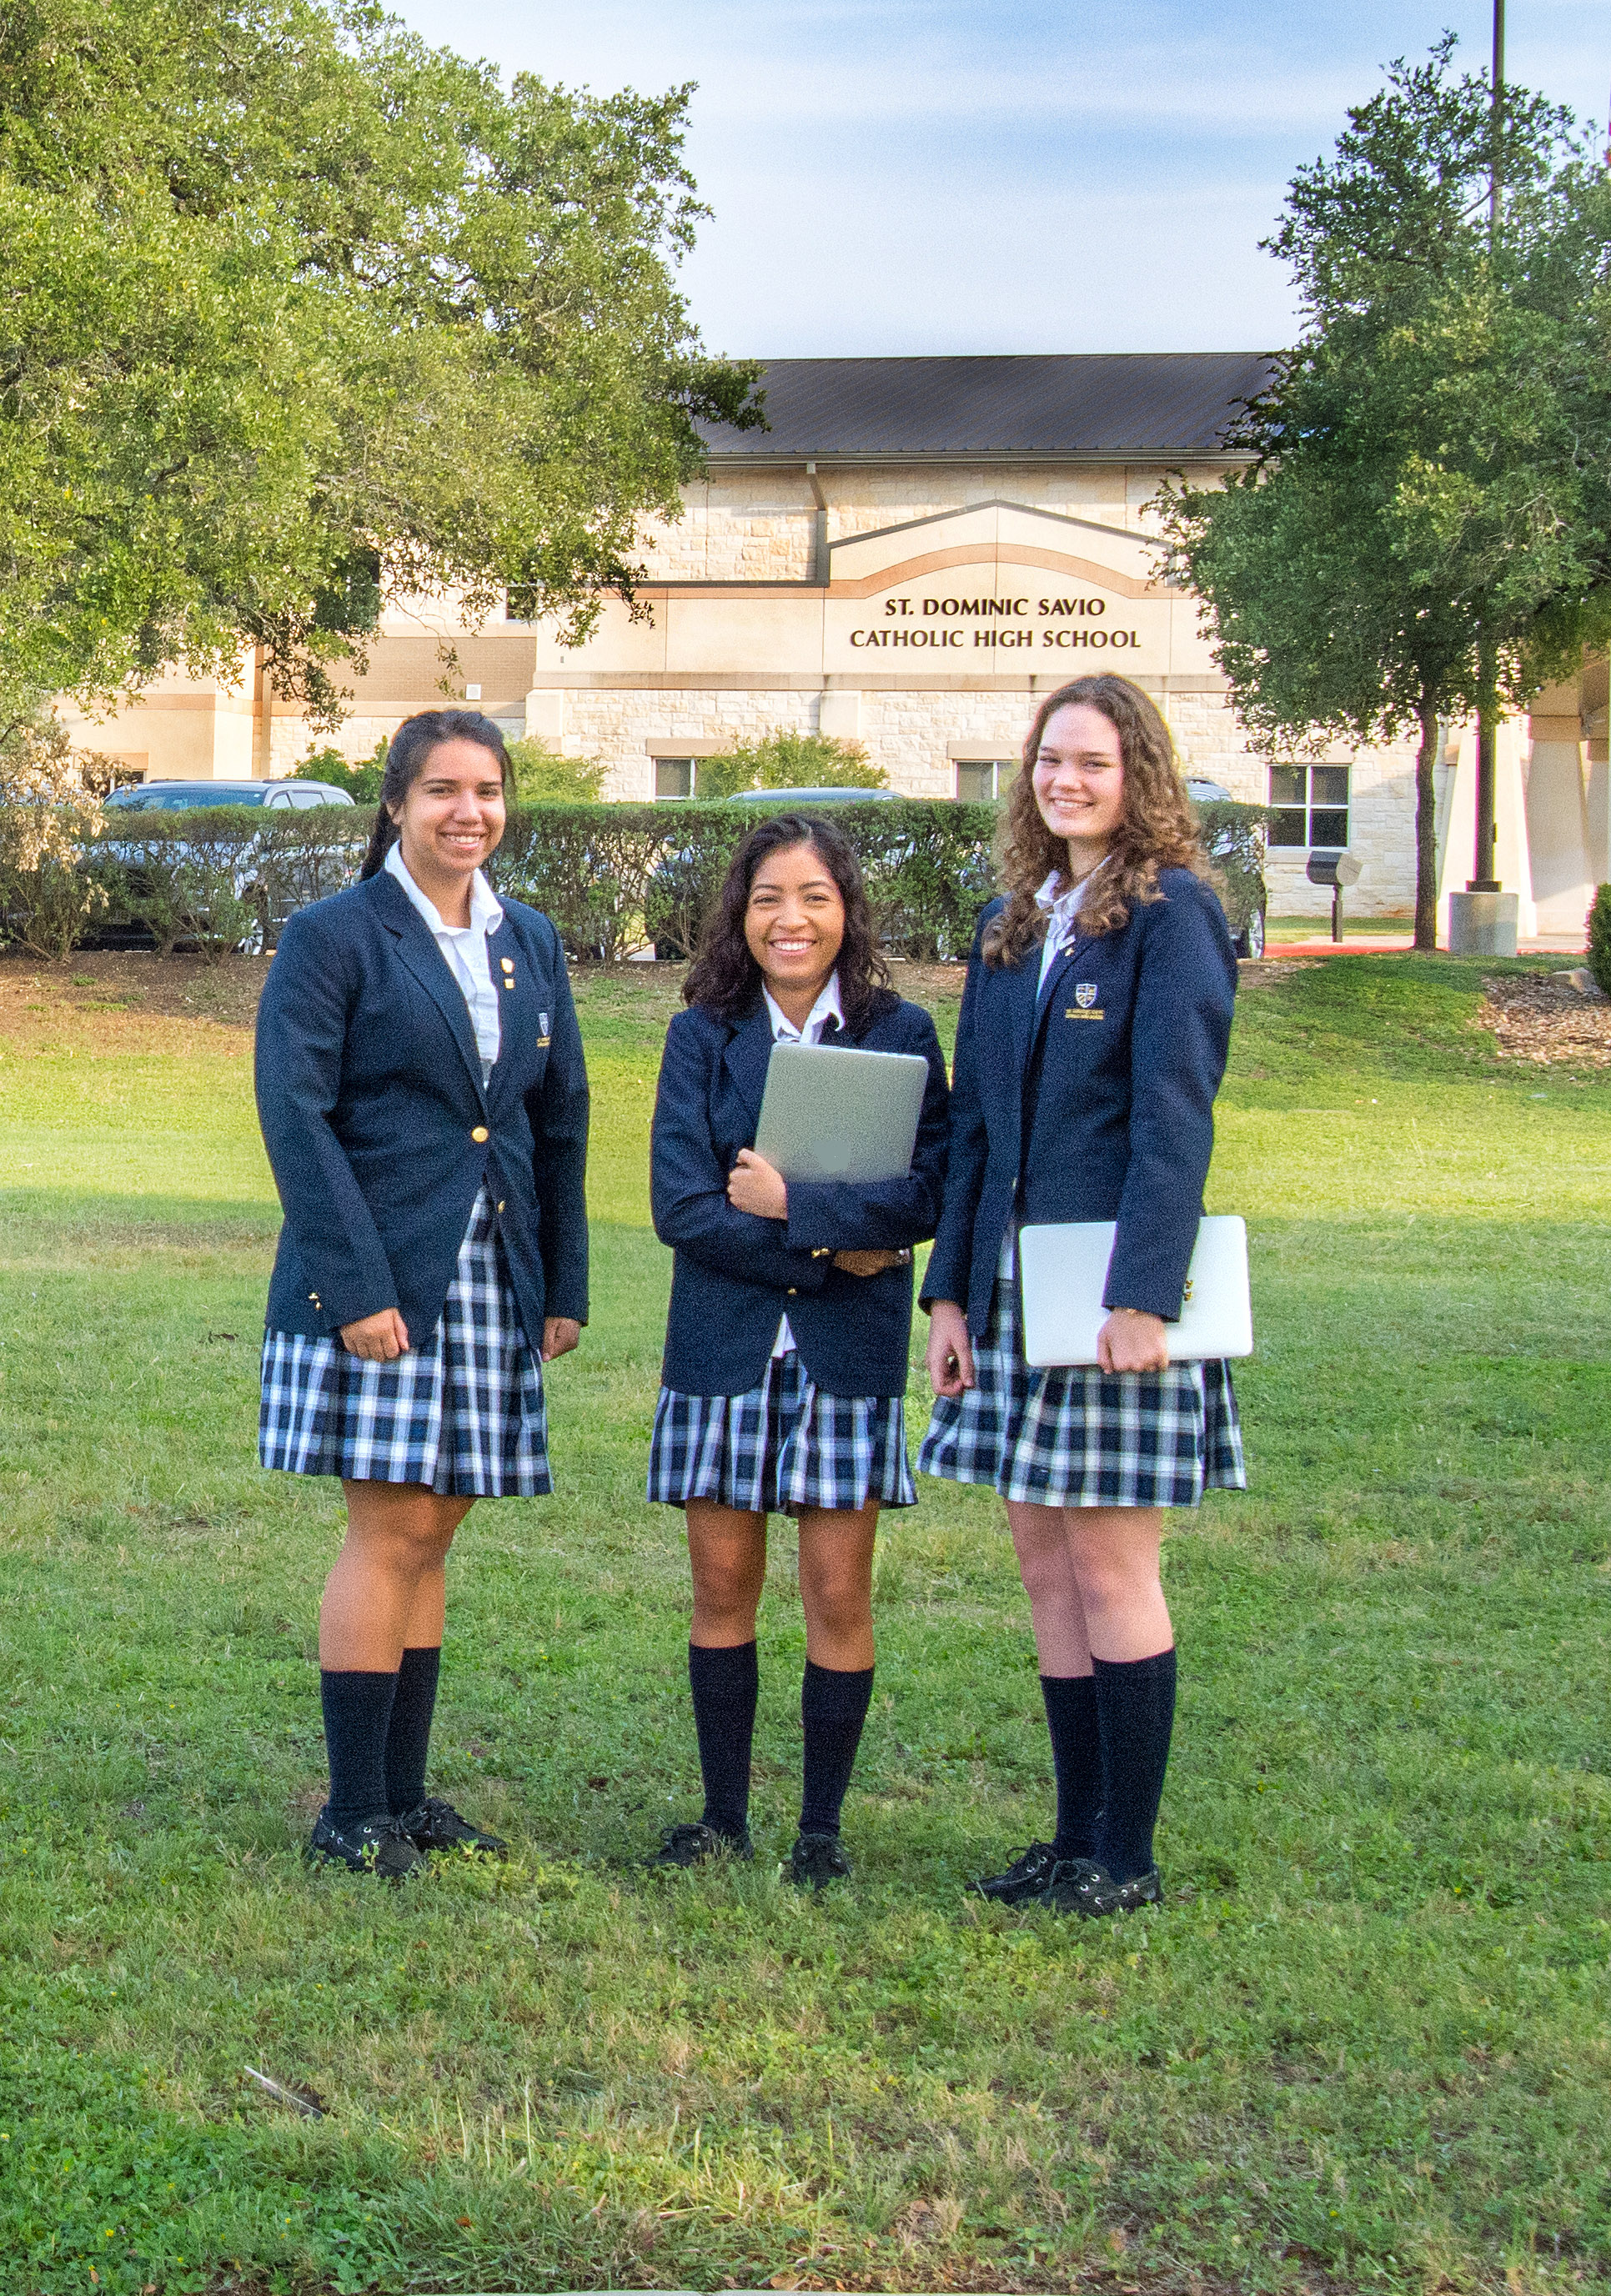 School Uniforms - St. Dominic Savio Catholic High School